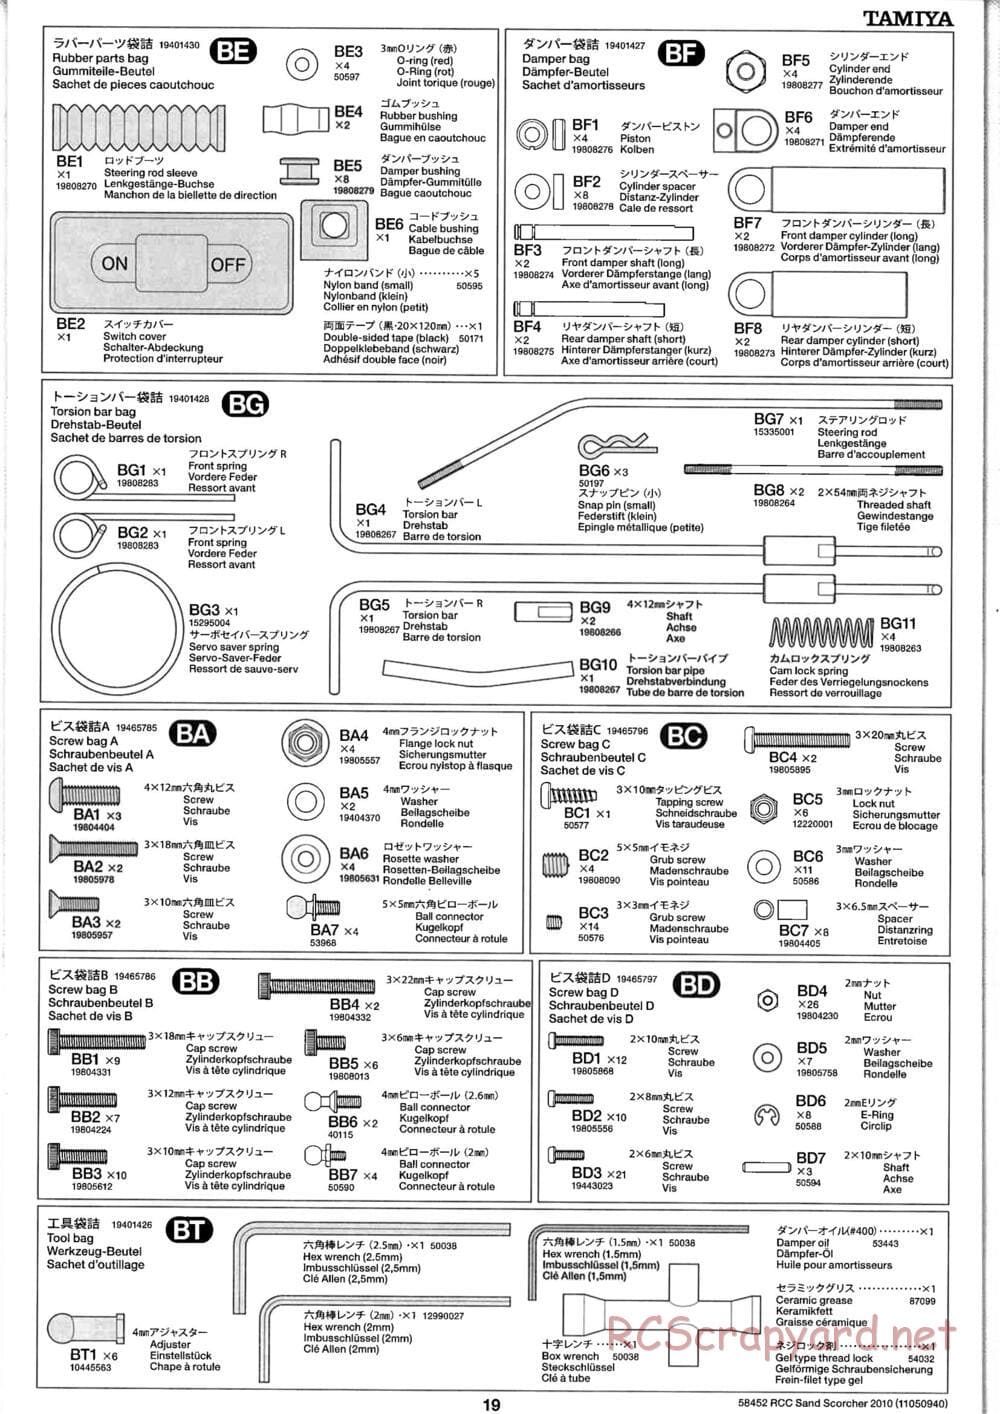 Tamiya - Sand Scorcher 2010 - SRB v1 Chassis - Manual - Page 19